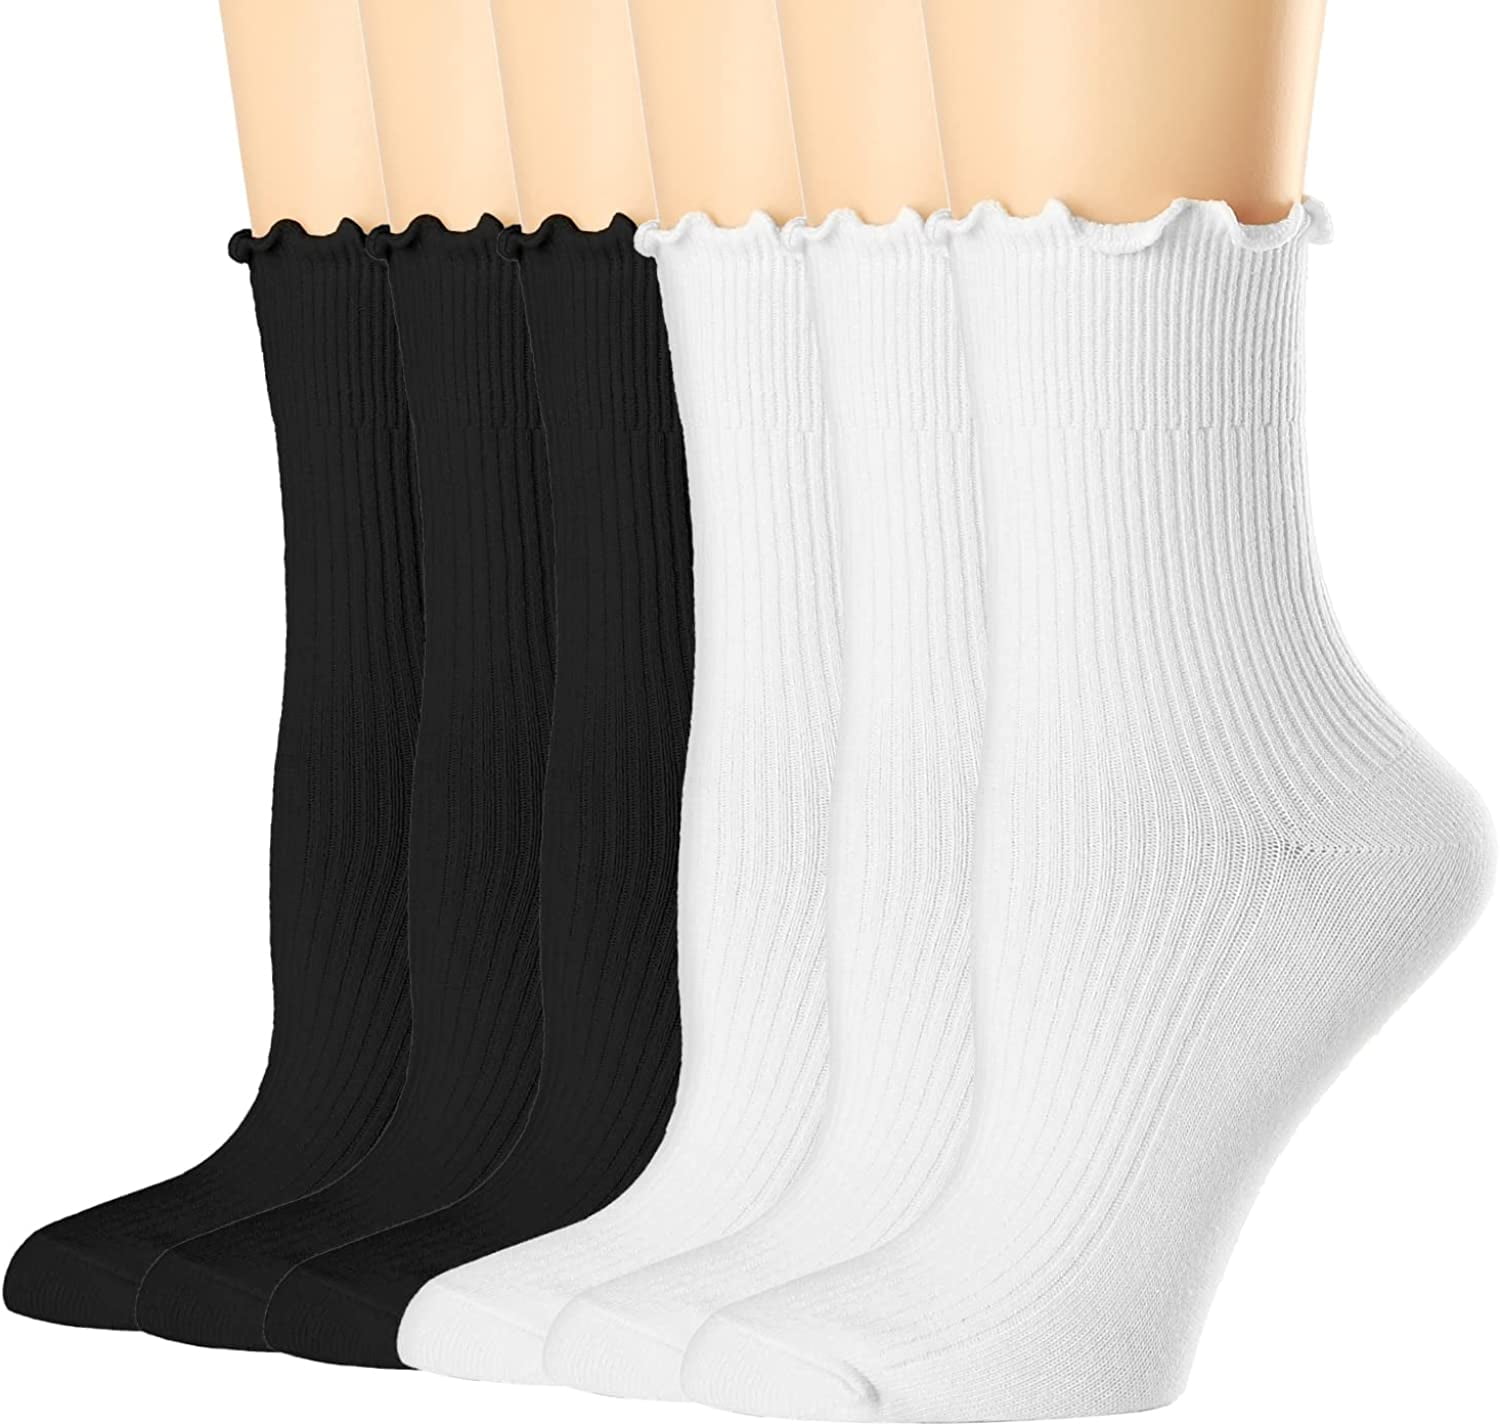 Womens Socks, Ruffle Turn-Cuff Casual Ankle Socks Warm Knit Cotton ...